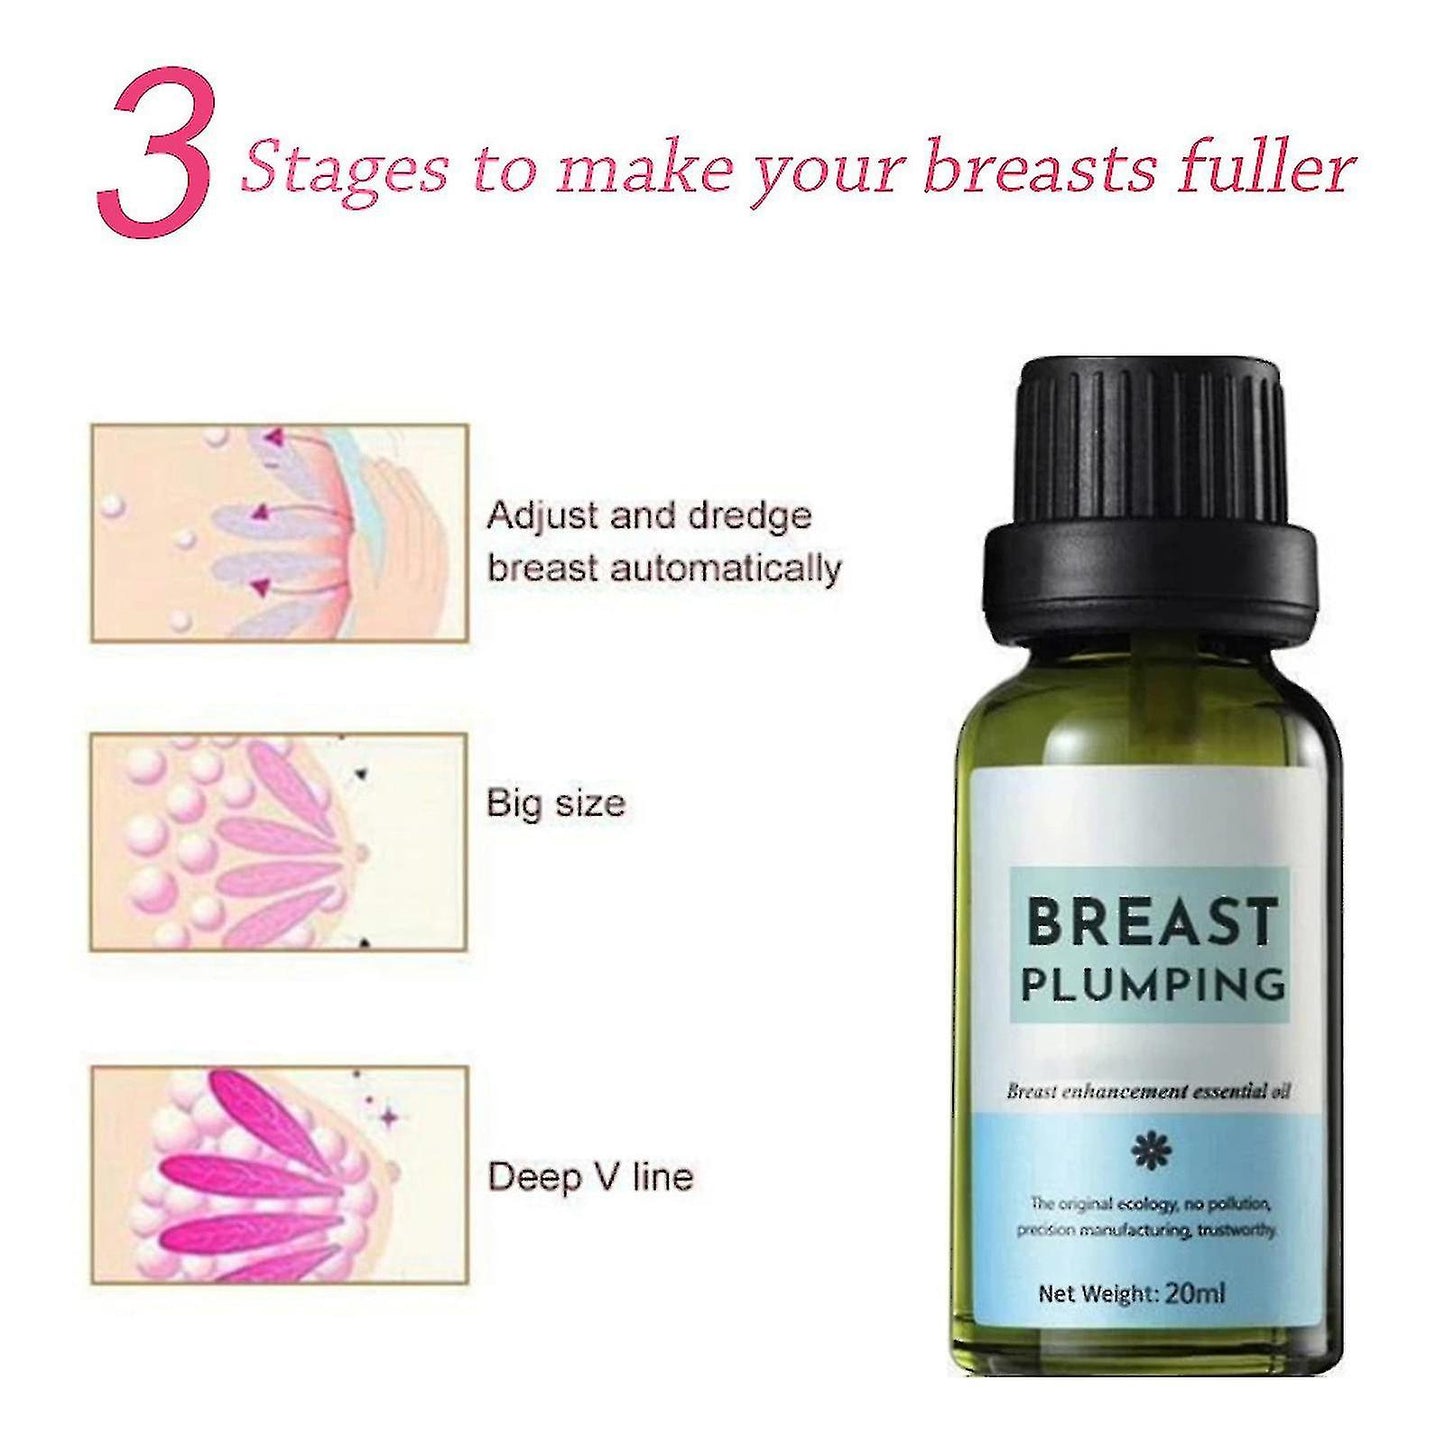 Breast Plumping Essential Oil Gentle Nourishing Breast Enlargement Care Massage Oil